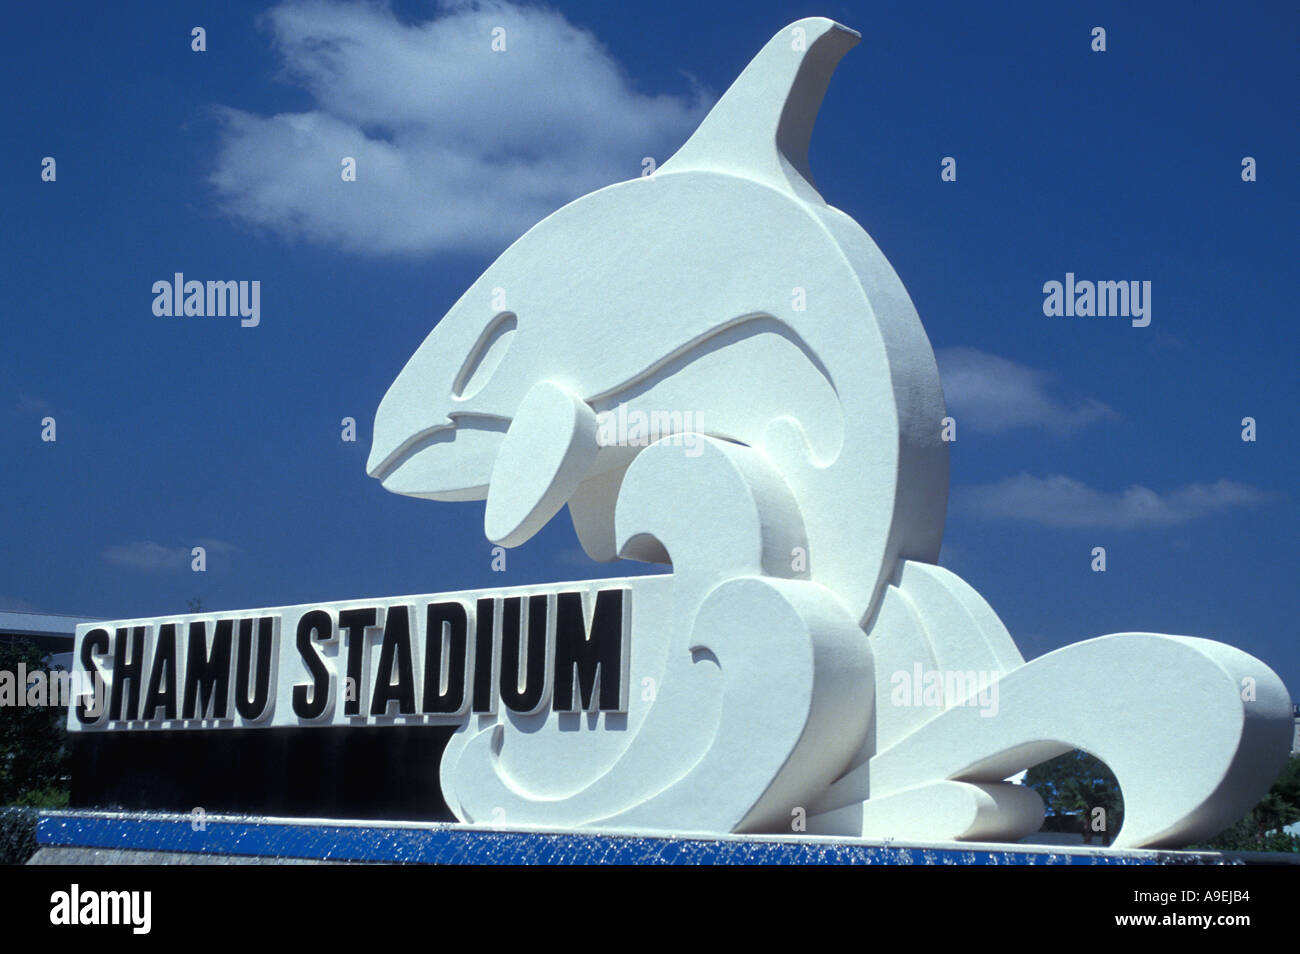 Orlando Florida USA Attractions Sea World Shamu Stadium Sign Stock Photo